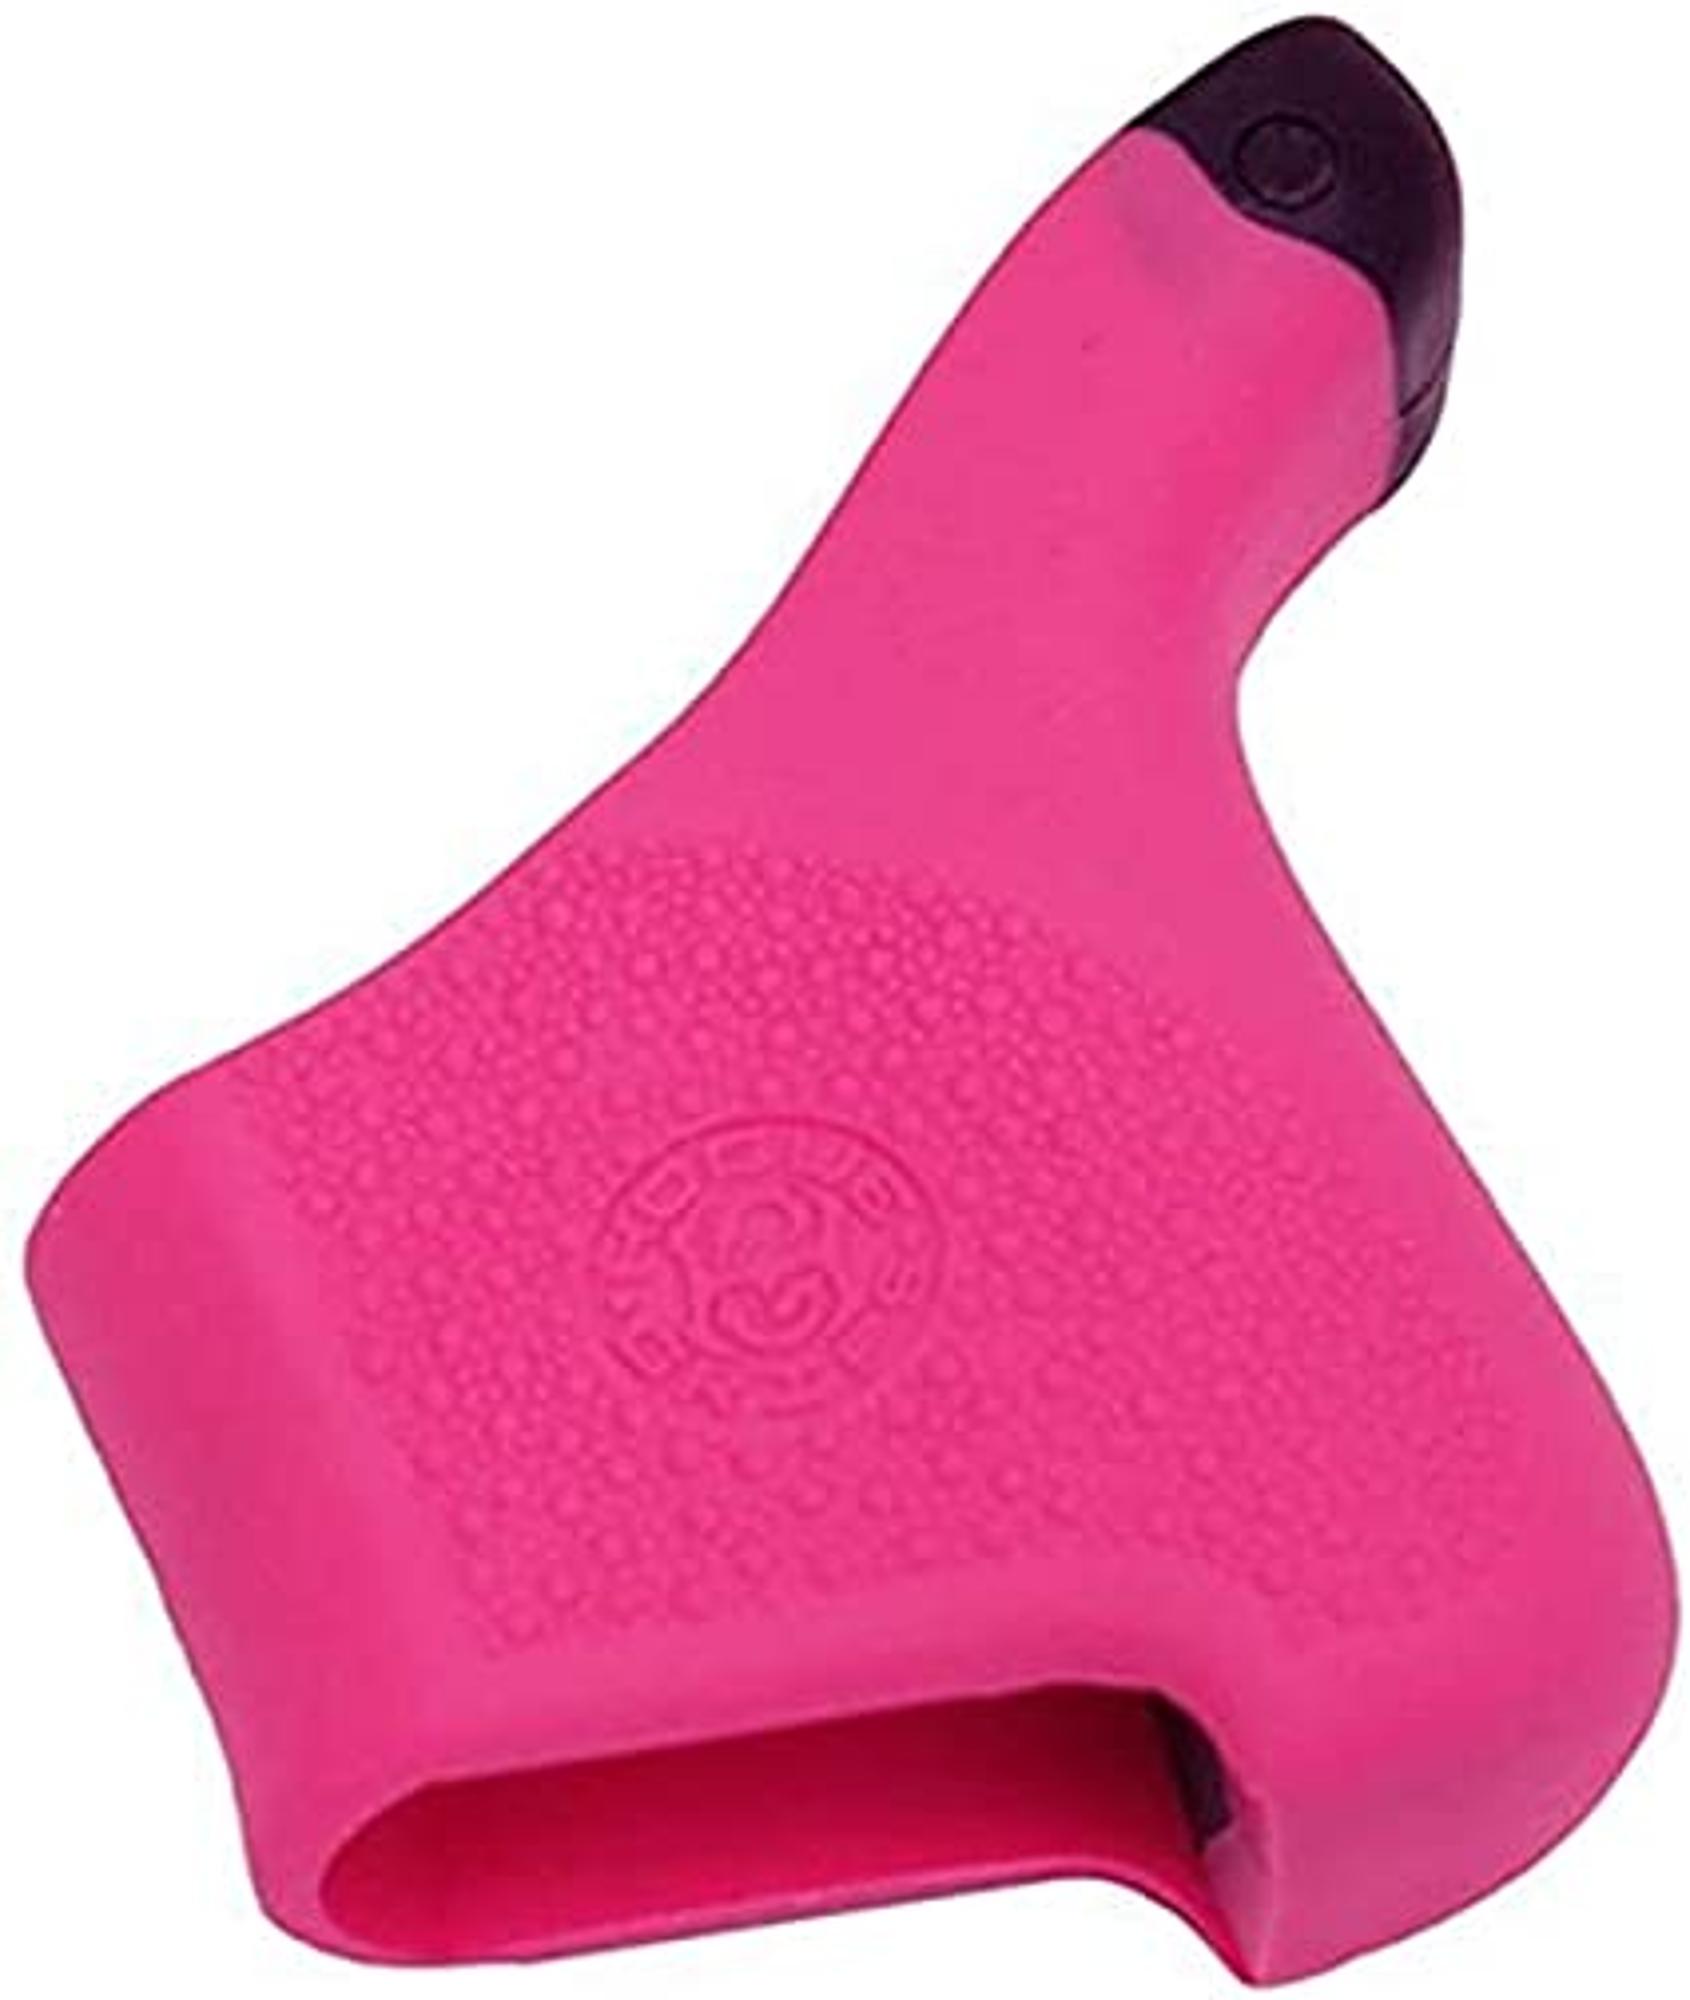 Hogue Hybrid Lcp Pink Grip Sleeve